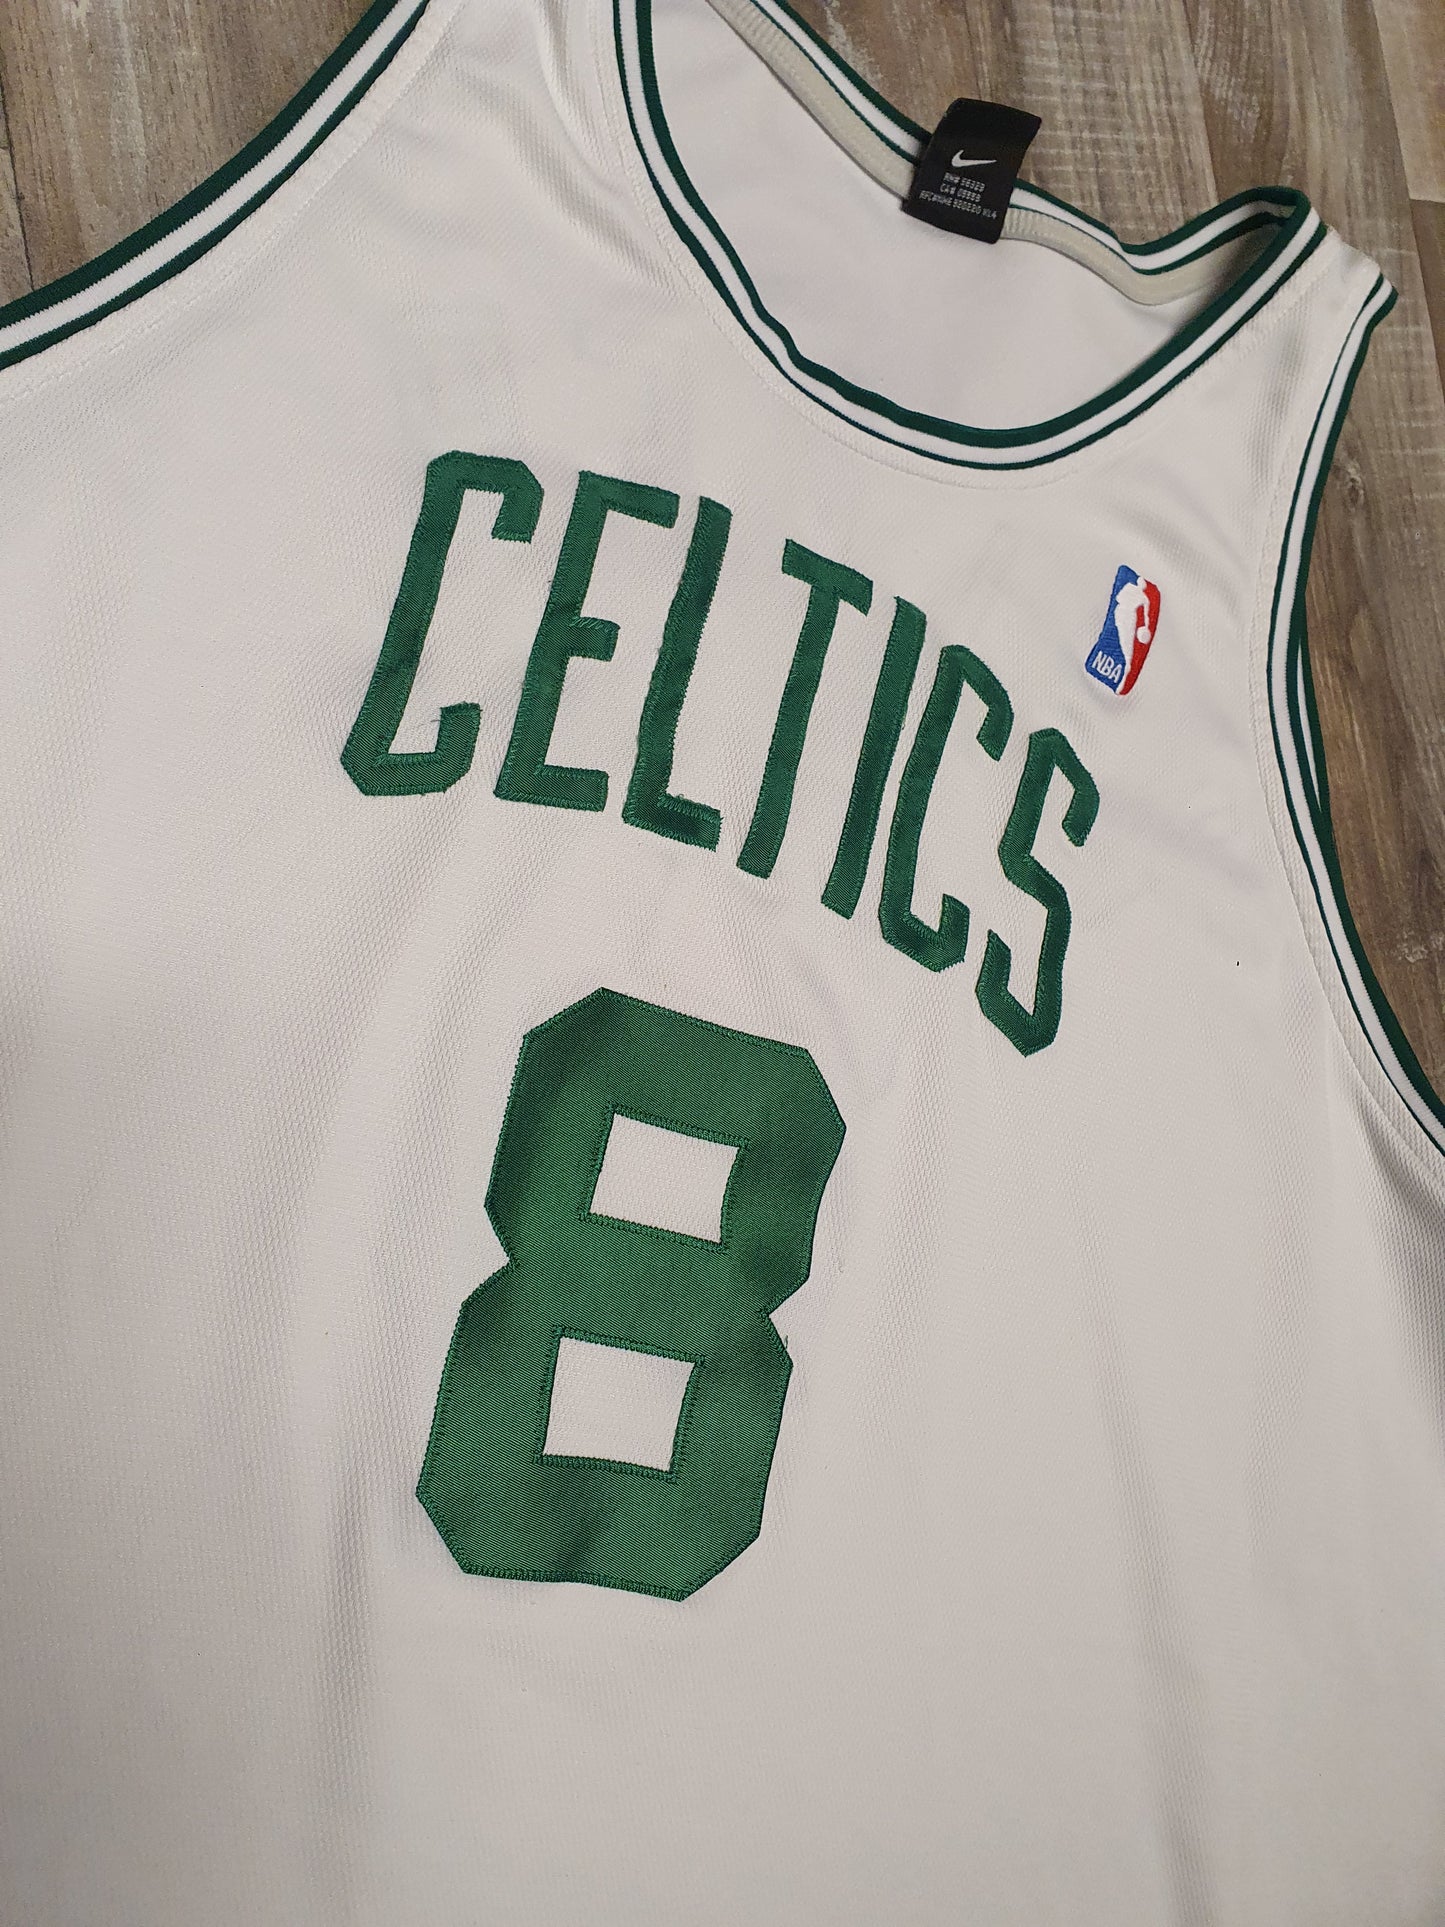 Antoine Walker Authentic Boston Celtics Jersey Size 3XL